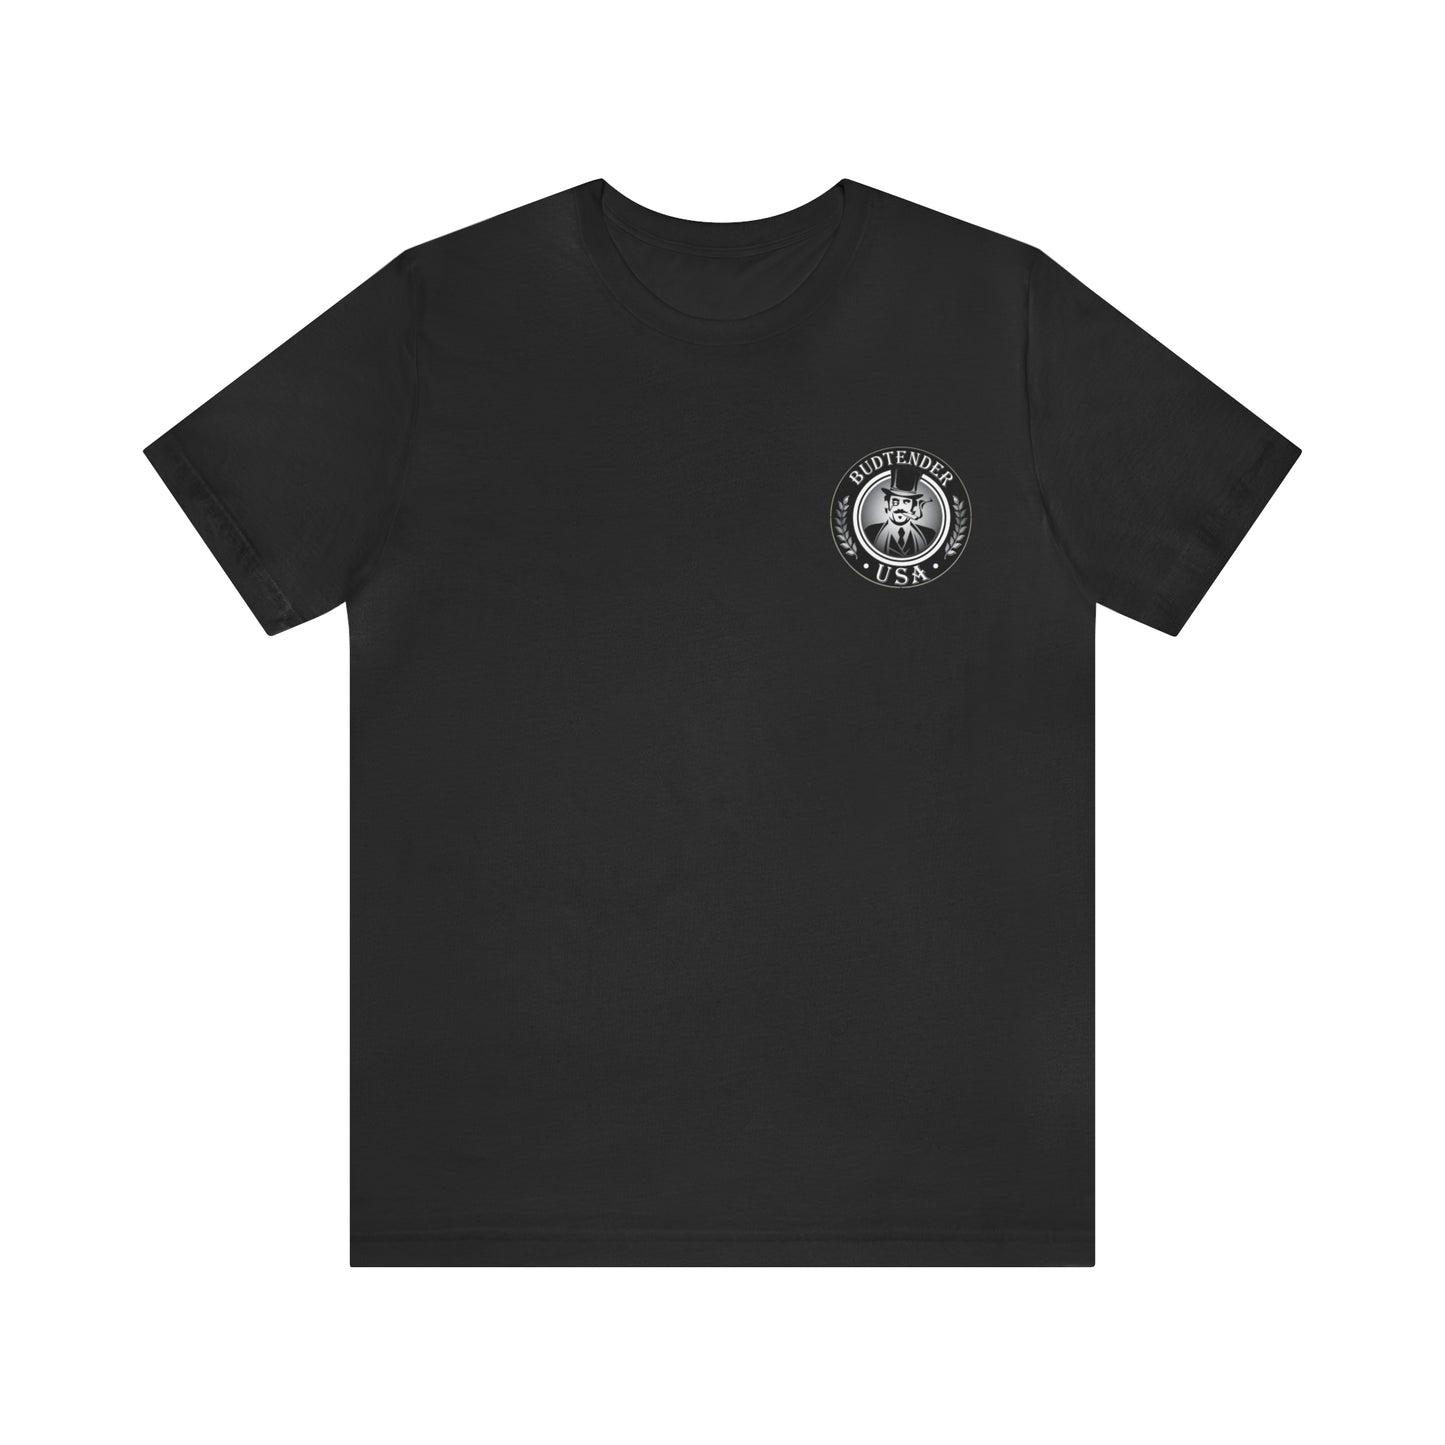 BudtenderUSA "Legacy" T-shirt